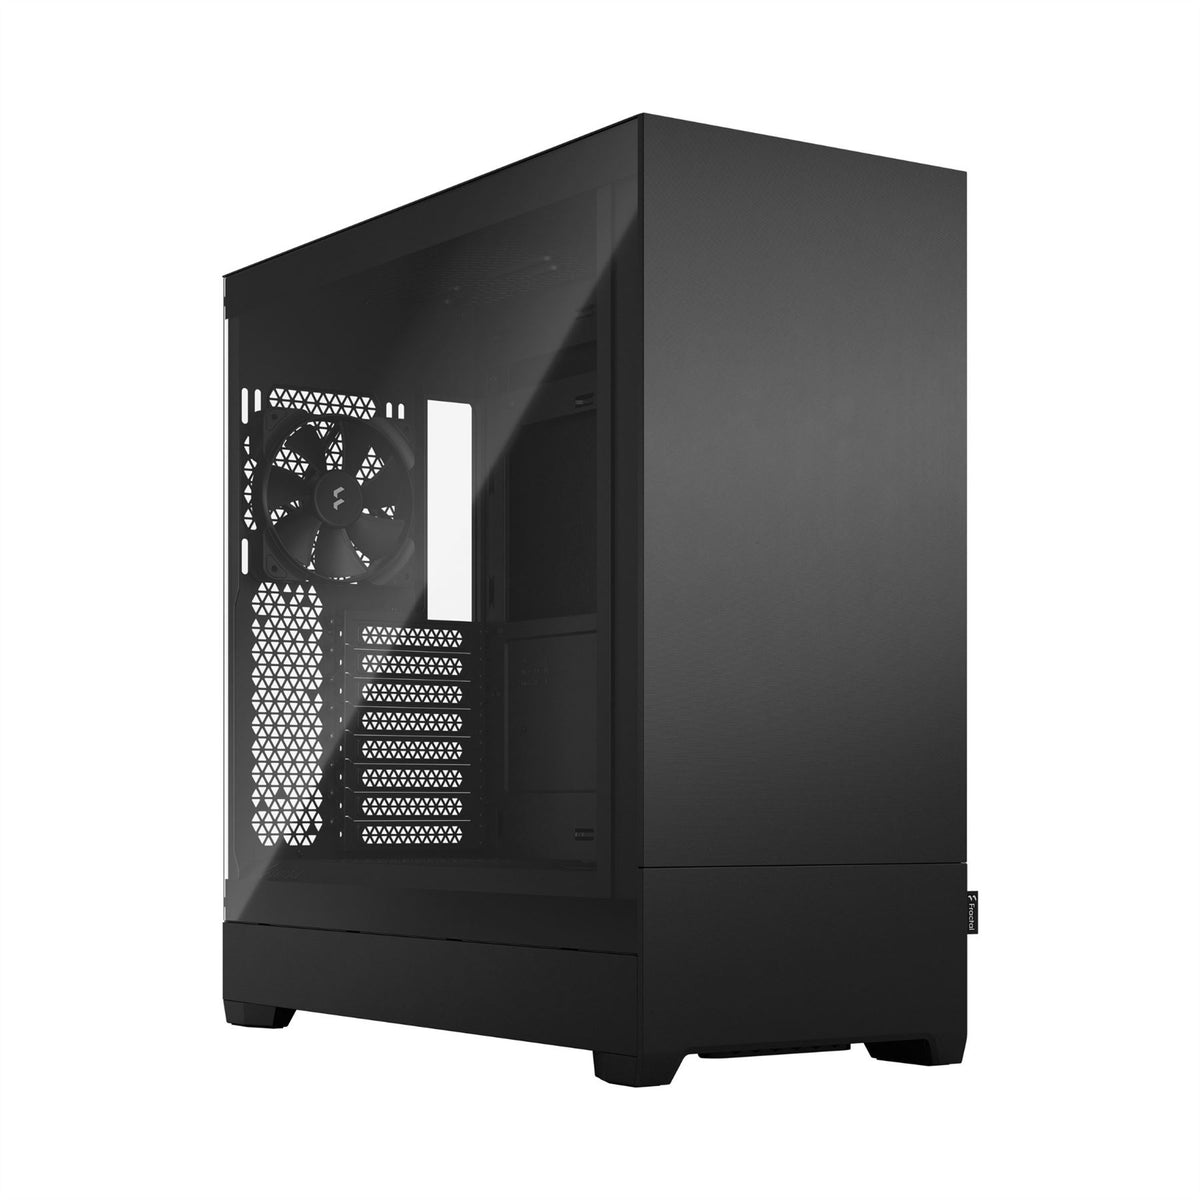 Fractal Design Pop XL Silent - ATX Full Tower Case in Black